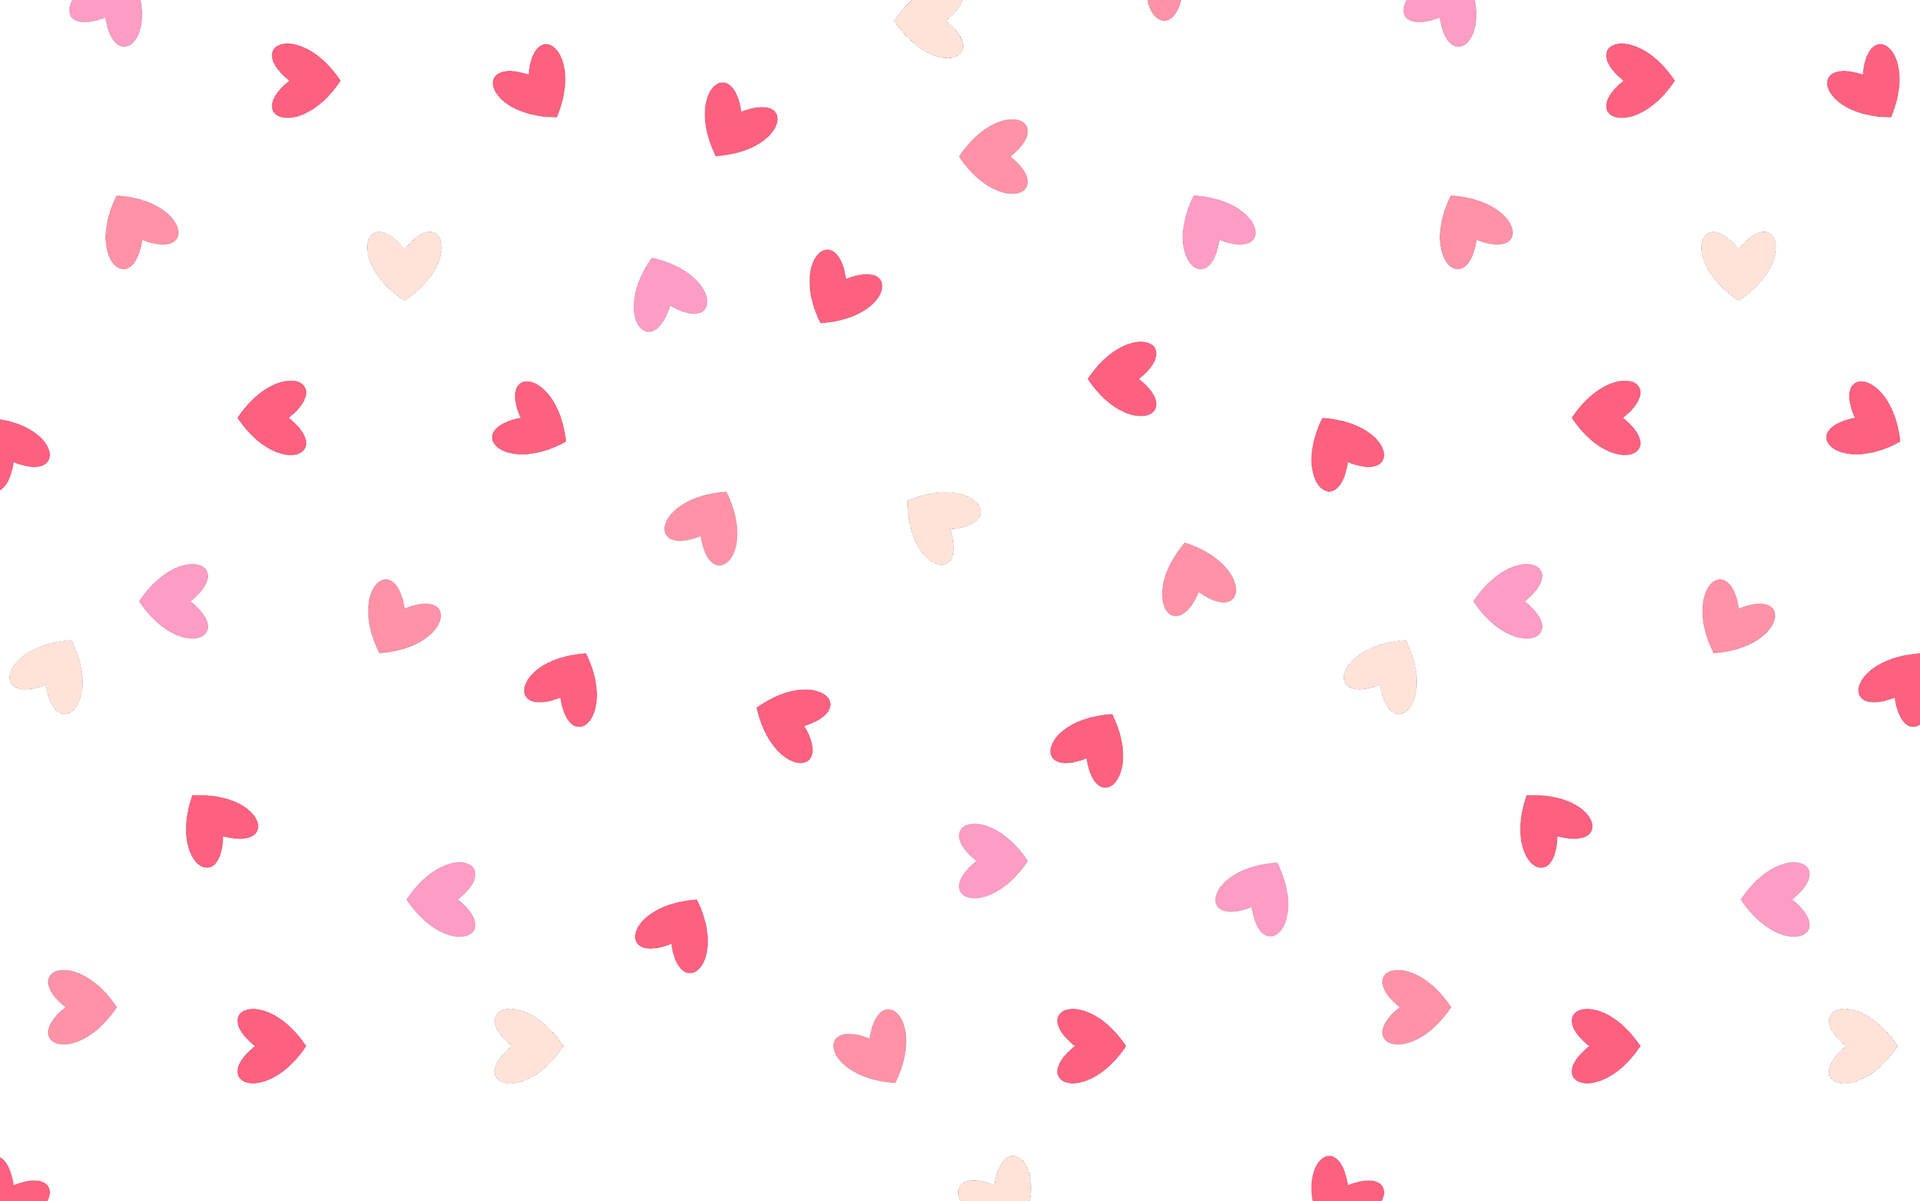 Free Valentines Day Desktop Wallpaper Downloads, Valentines Day Desktop Wallpaper for FREE